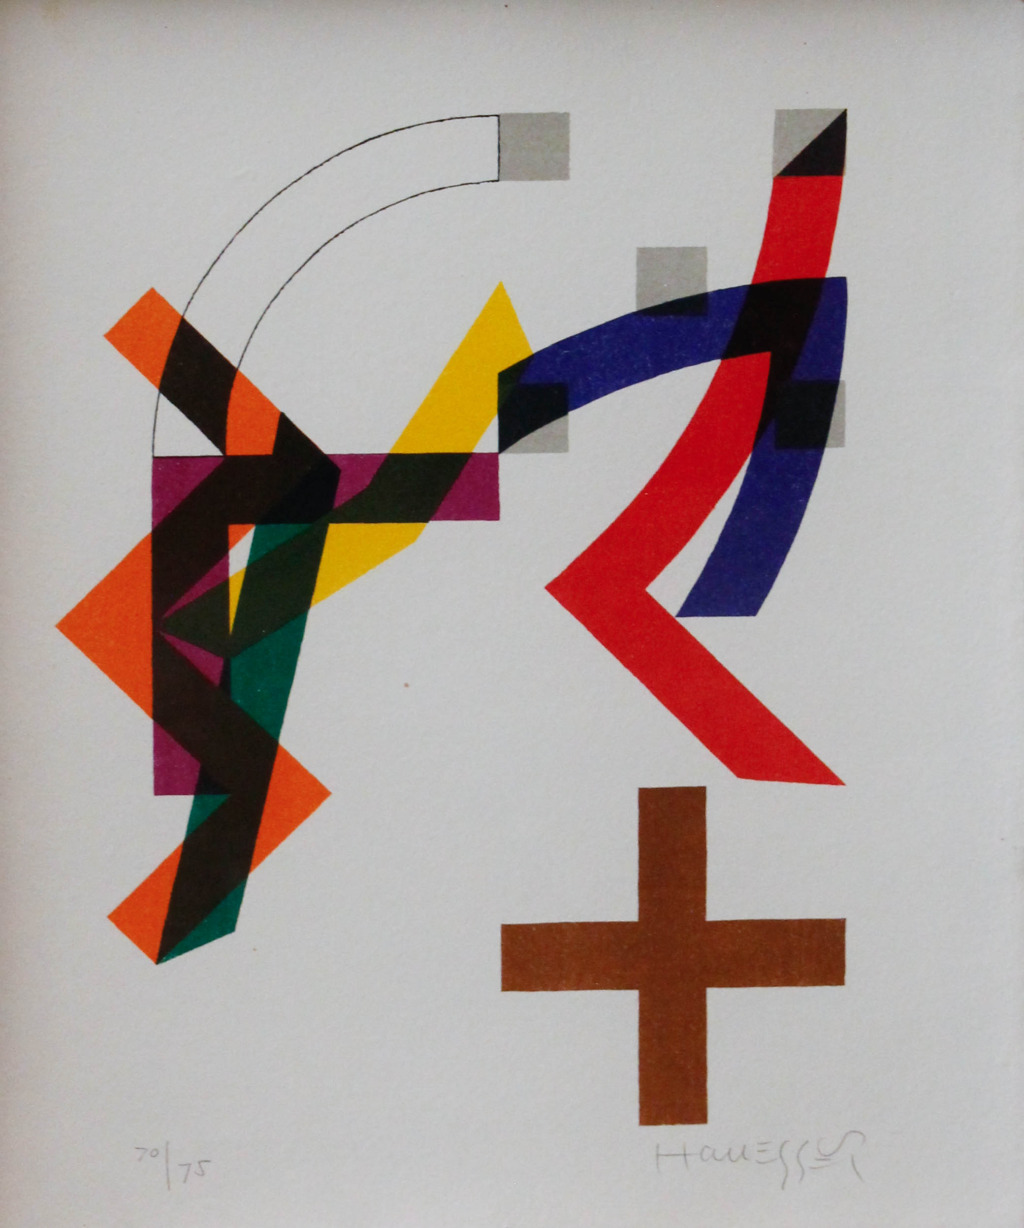 Gottfried Honegger, Structures III, Motiv 06/8, 1971
Lithography 9-colors, Print Lafranca, Locarno
37 x 30 cm
70/75